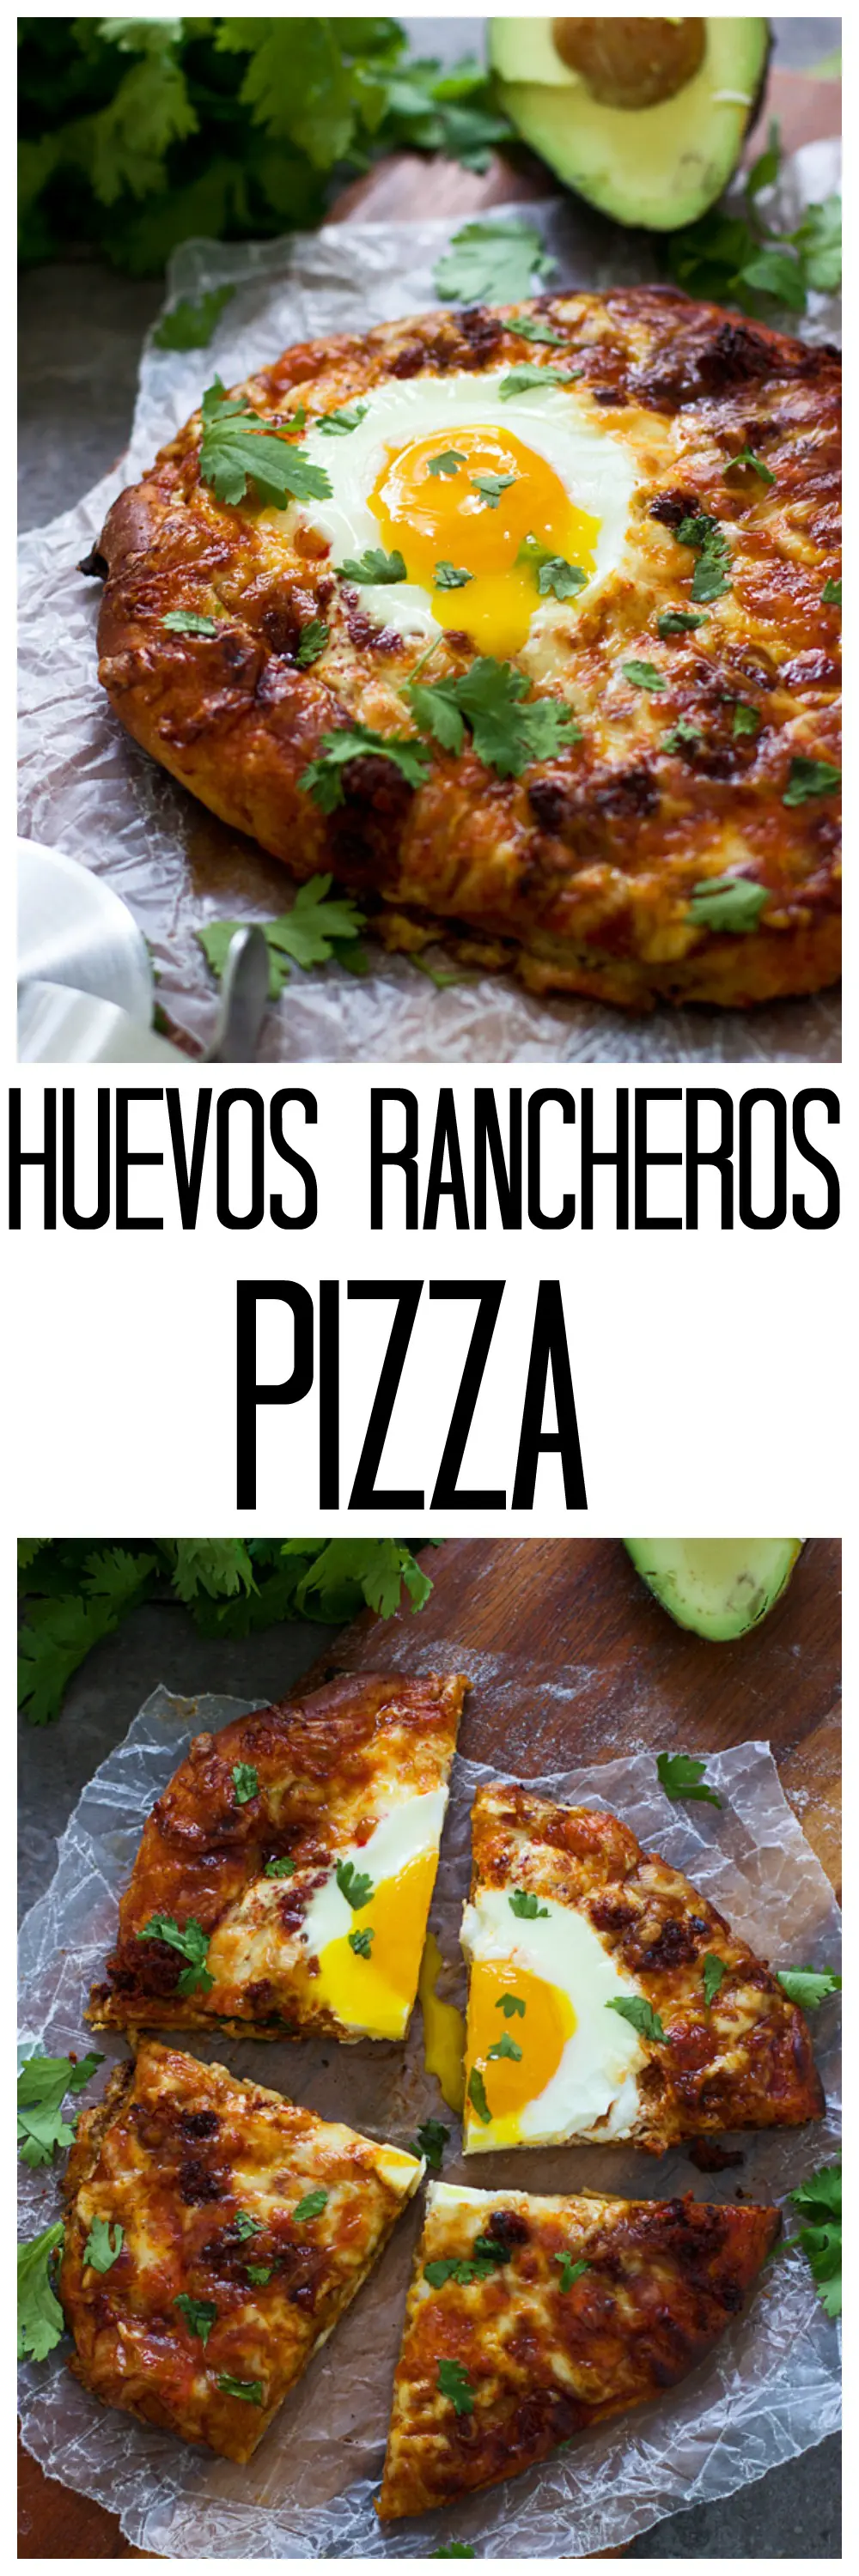 Hevos Rancheros Pizza